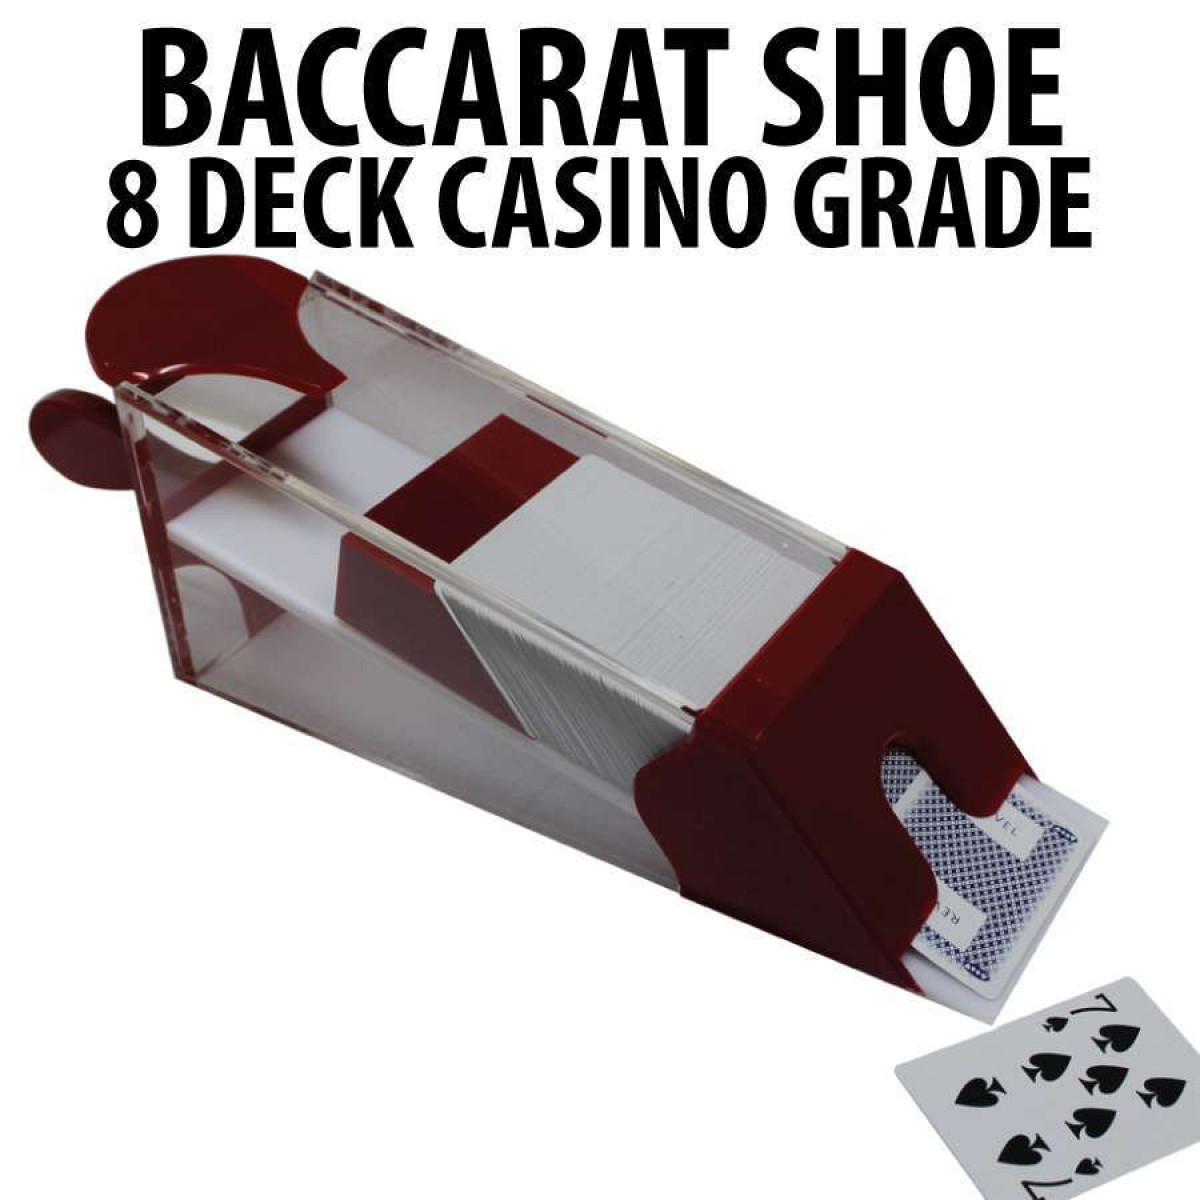 Acrylic Poker Card Dealing Shoe Professional Dealer for Home Blackjack Games